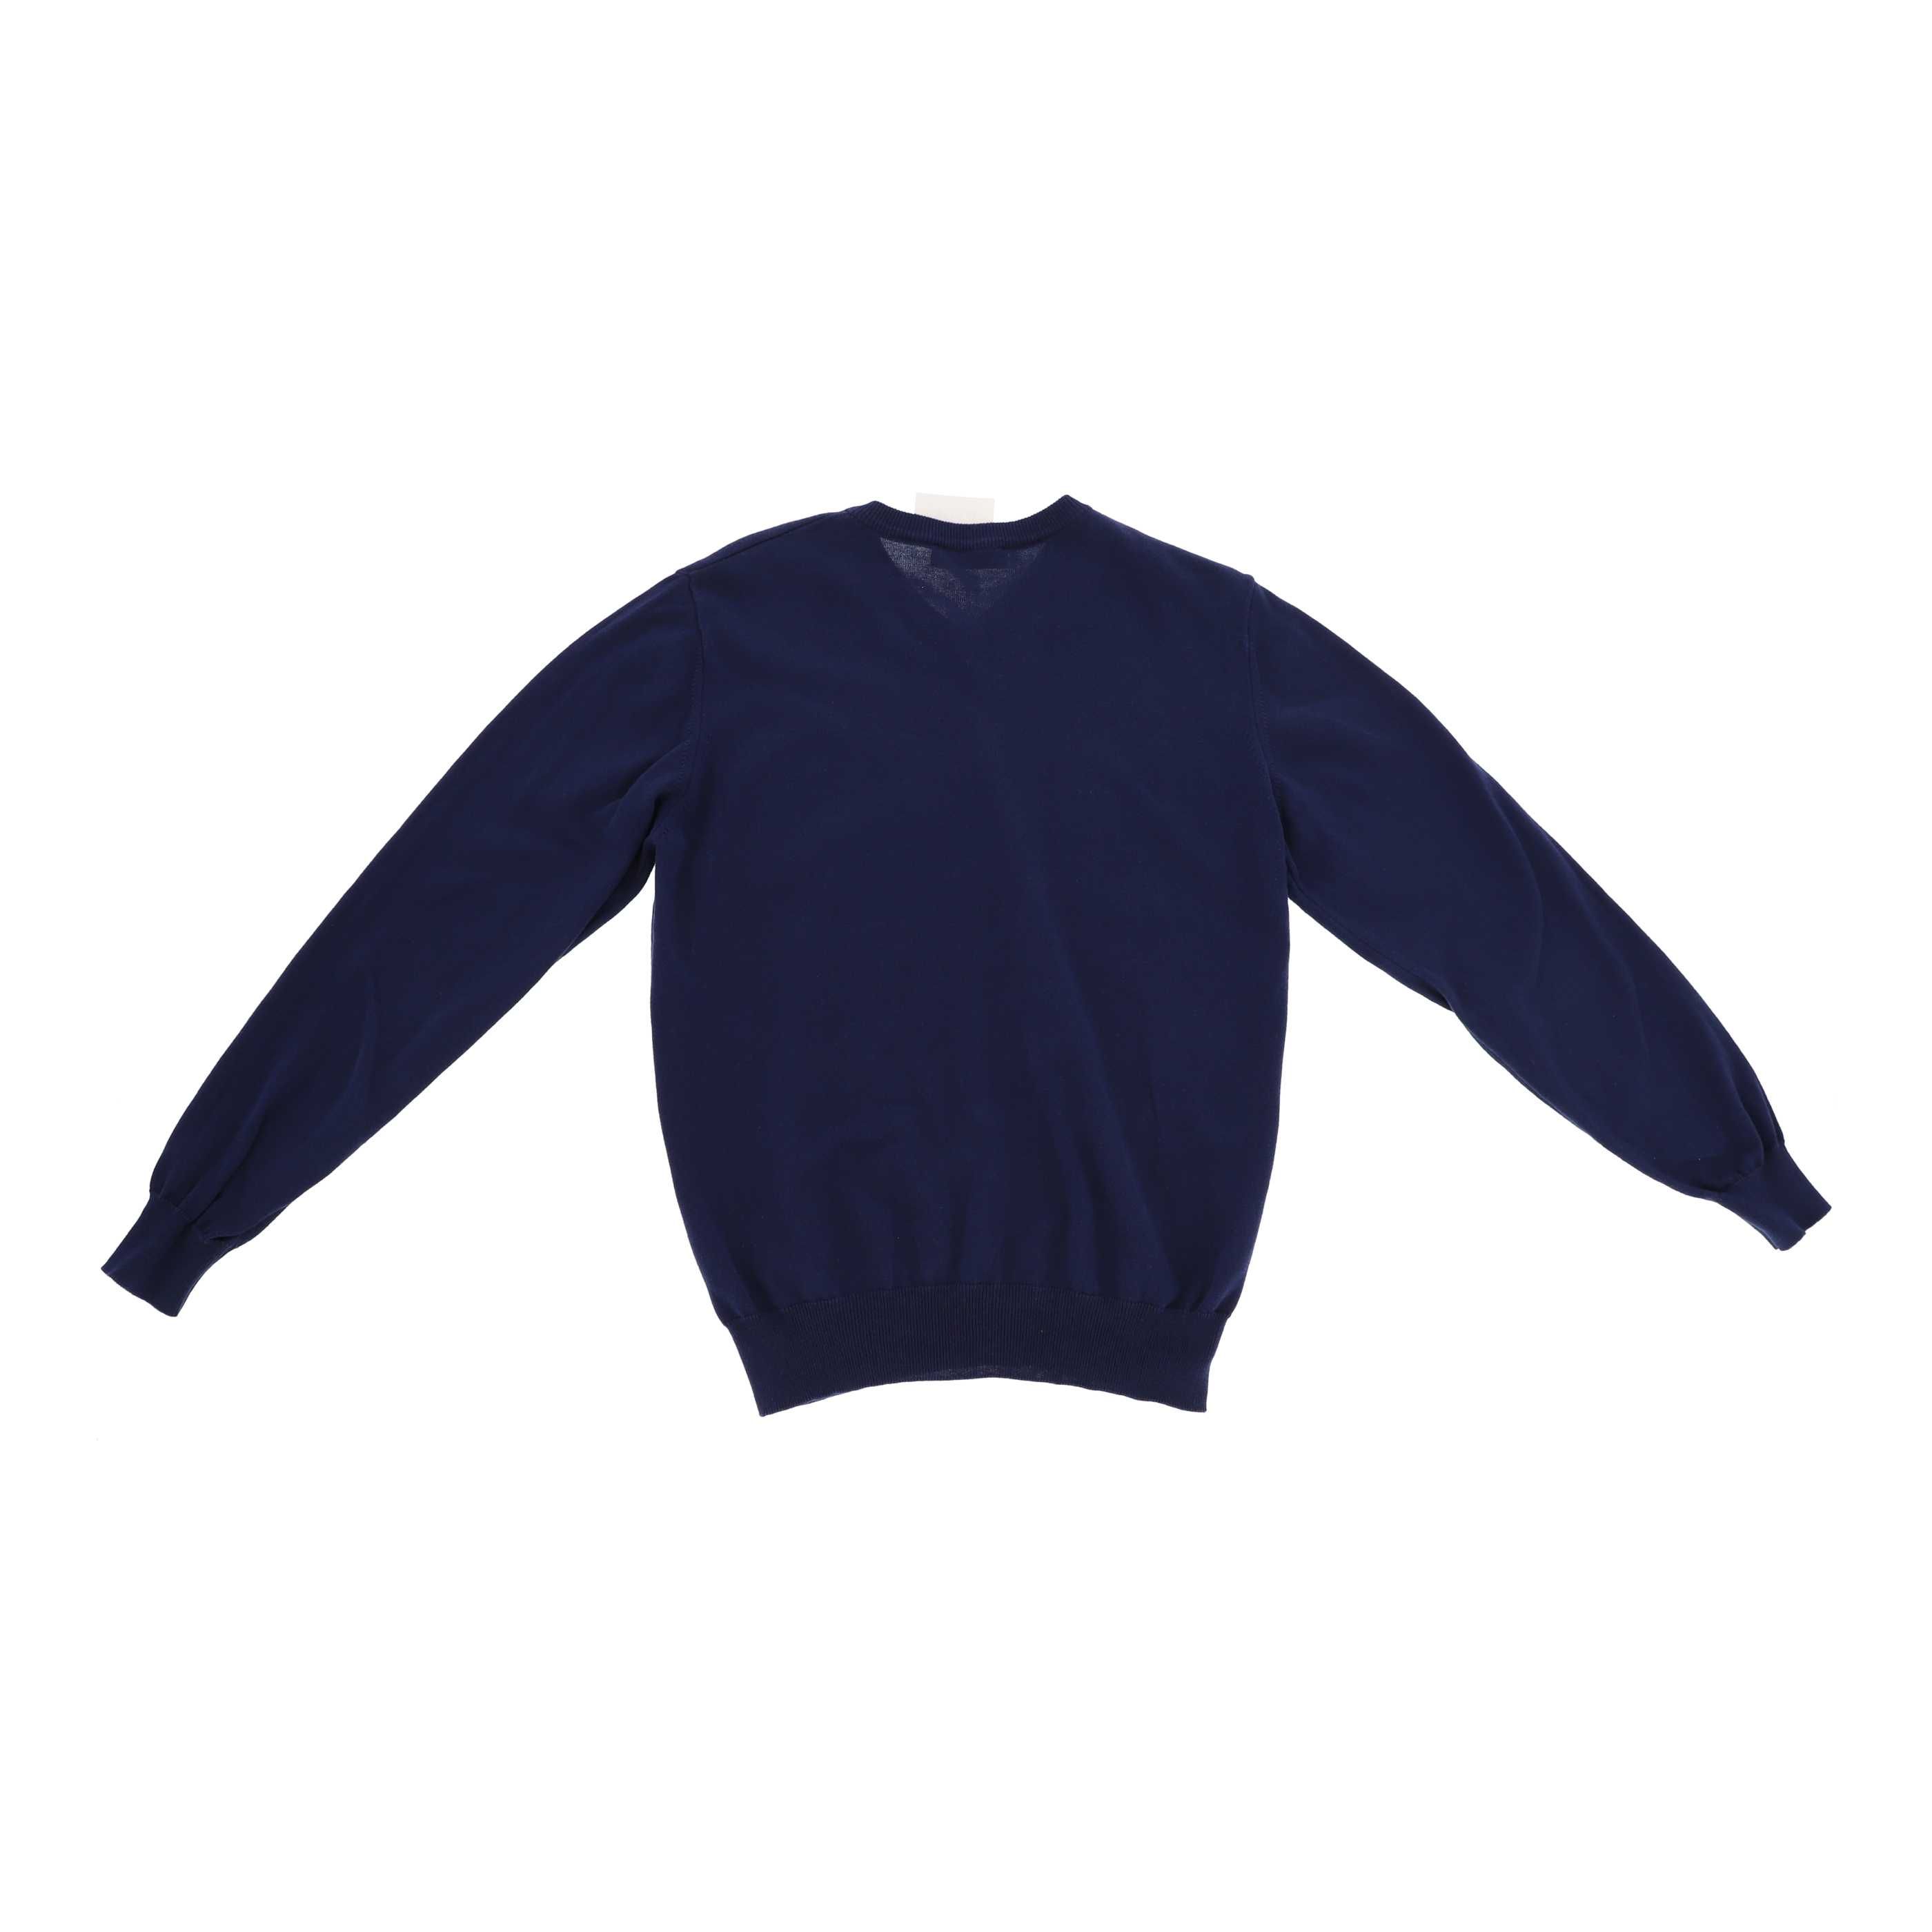 Granatowy sweter v-neck marki Lancerto, rozmiar 38